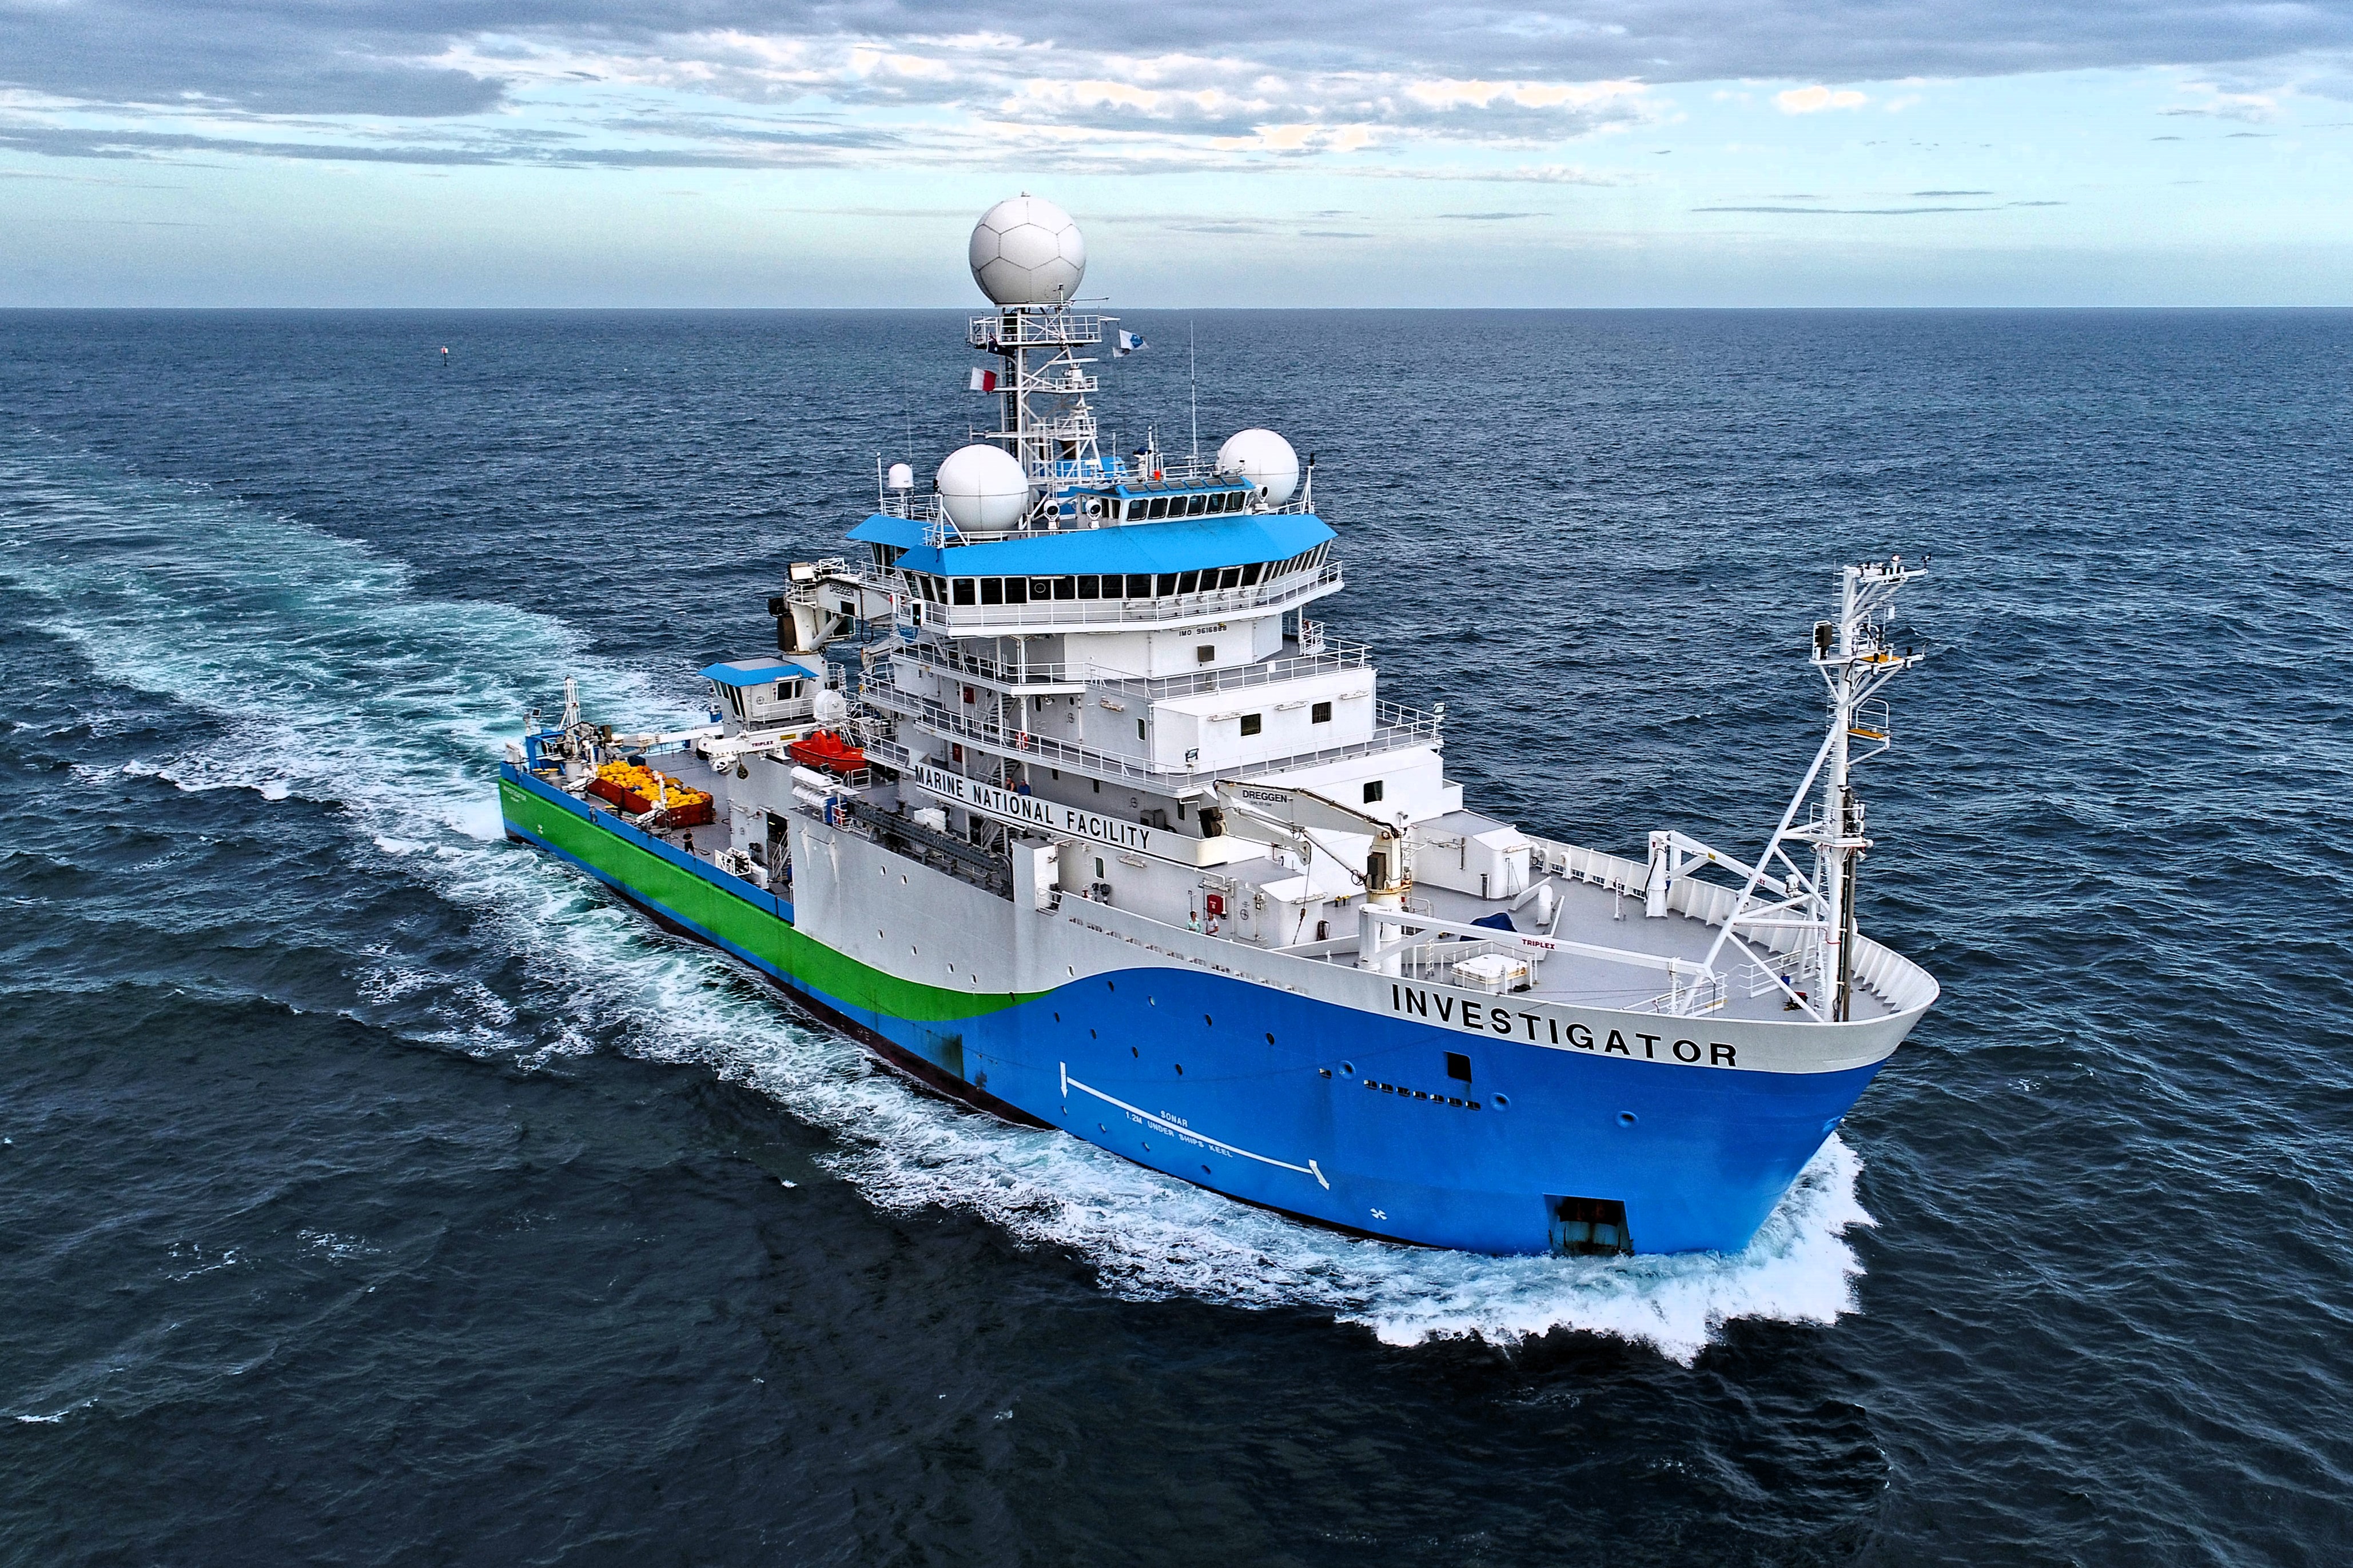 3 RV INVESTIGATOR Australias advanced ocean research vessel operated by CSIRO Australias national scie